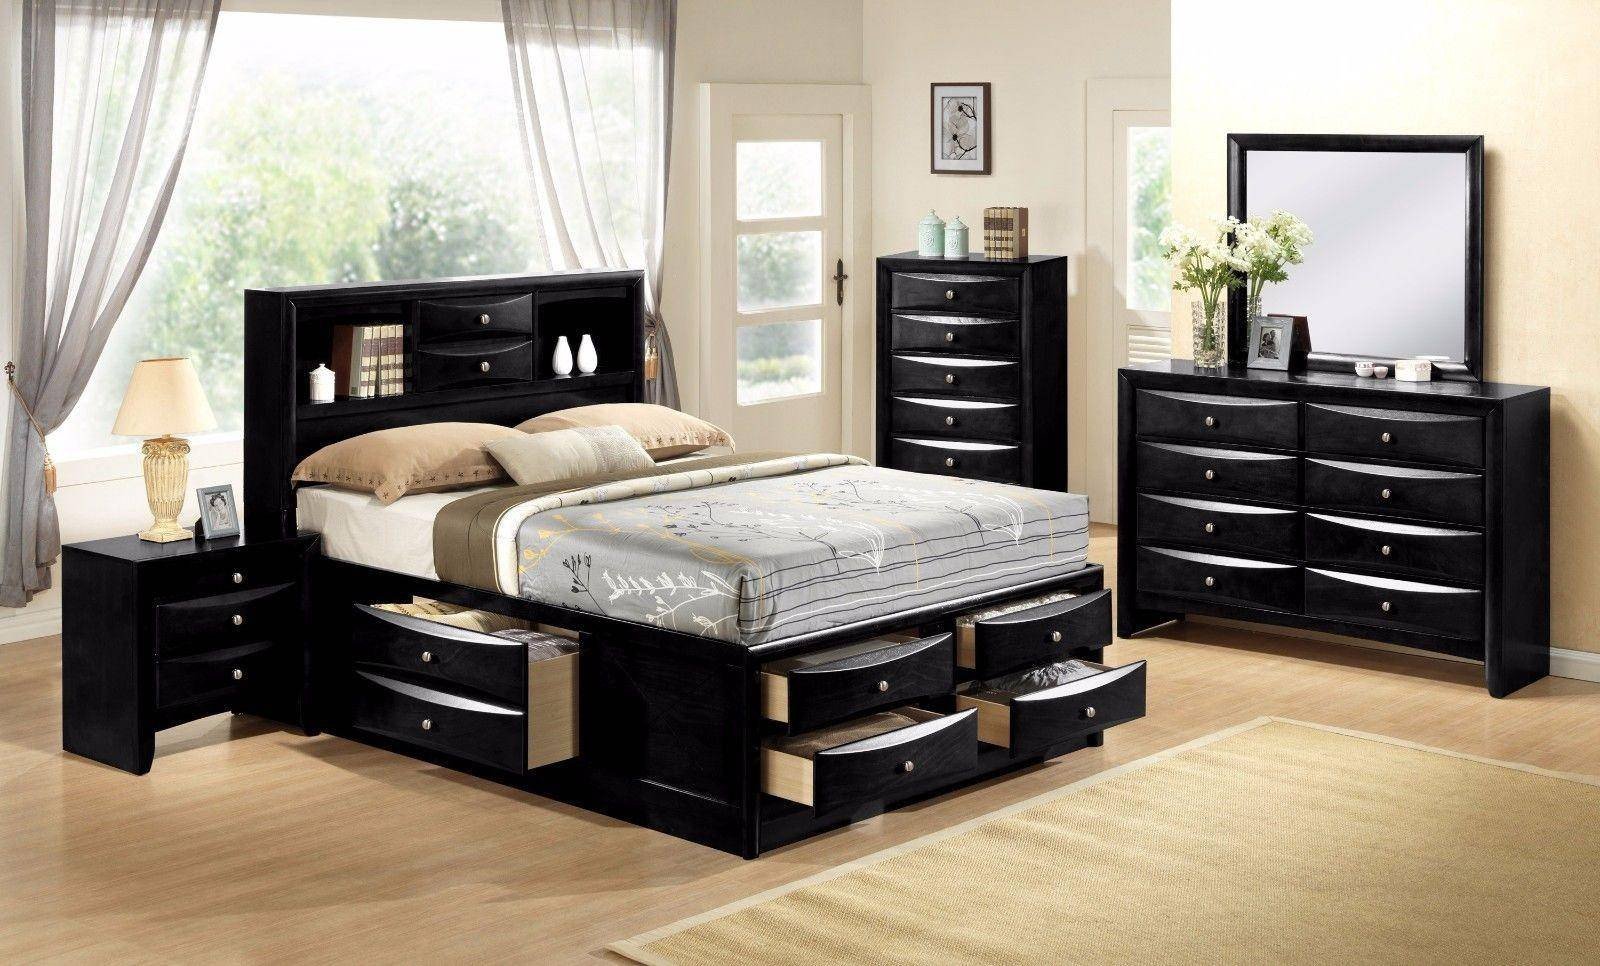 King Size Bedroom Set for Sale New Crown Mark B4285 Emily Modern Black Finish Storage King Size